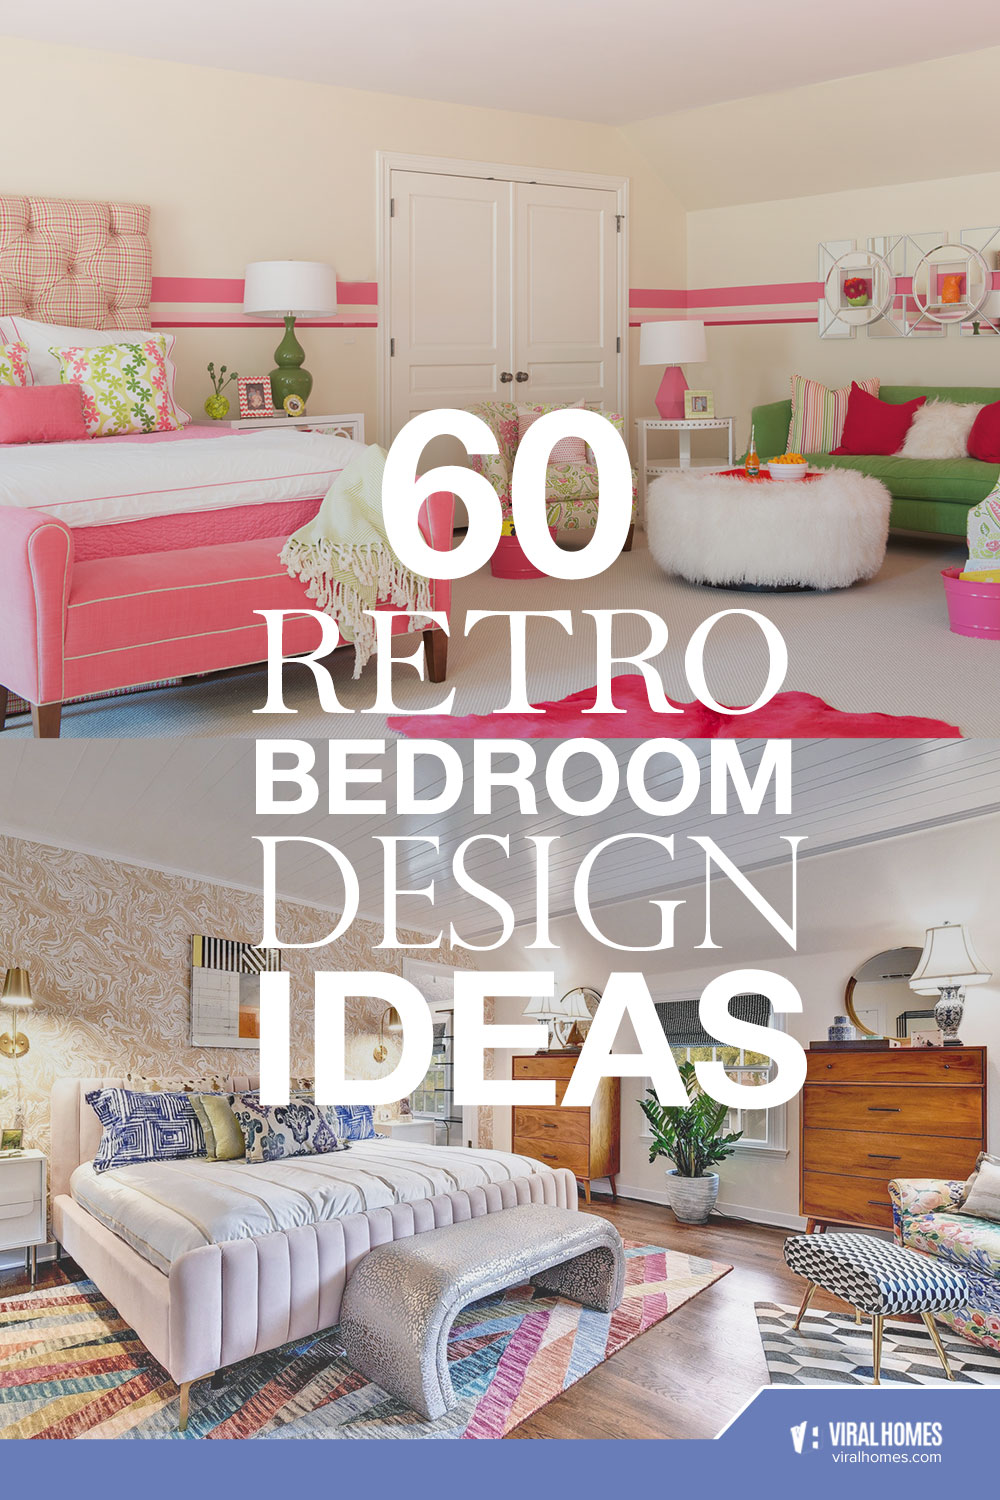 Hip Retro Bedroom Designs That'll Take You Back